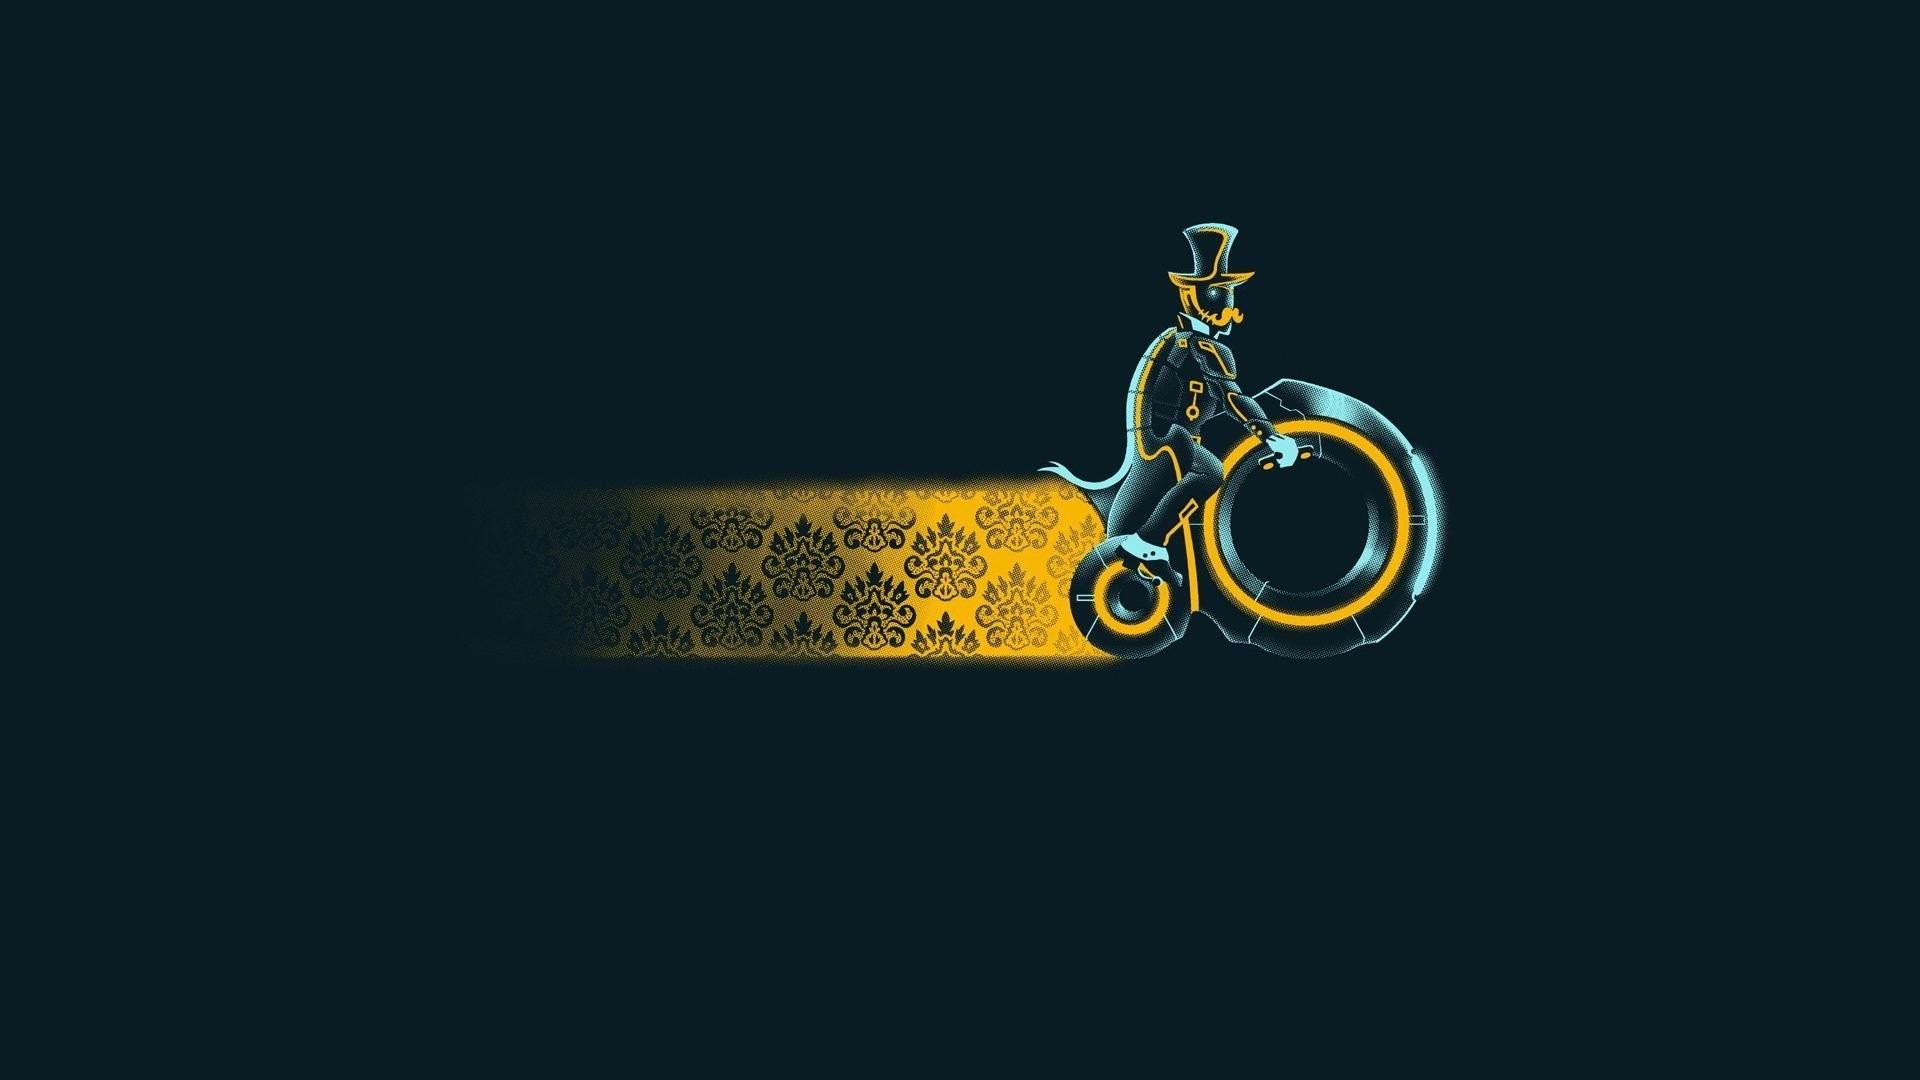 1920x1080 Bike minimalistic vintage funny Tron wallpaper |  | 317004 |  WallpaperUP